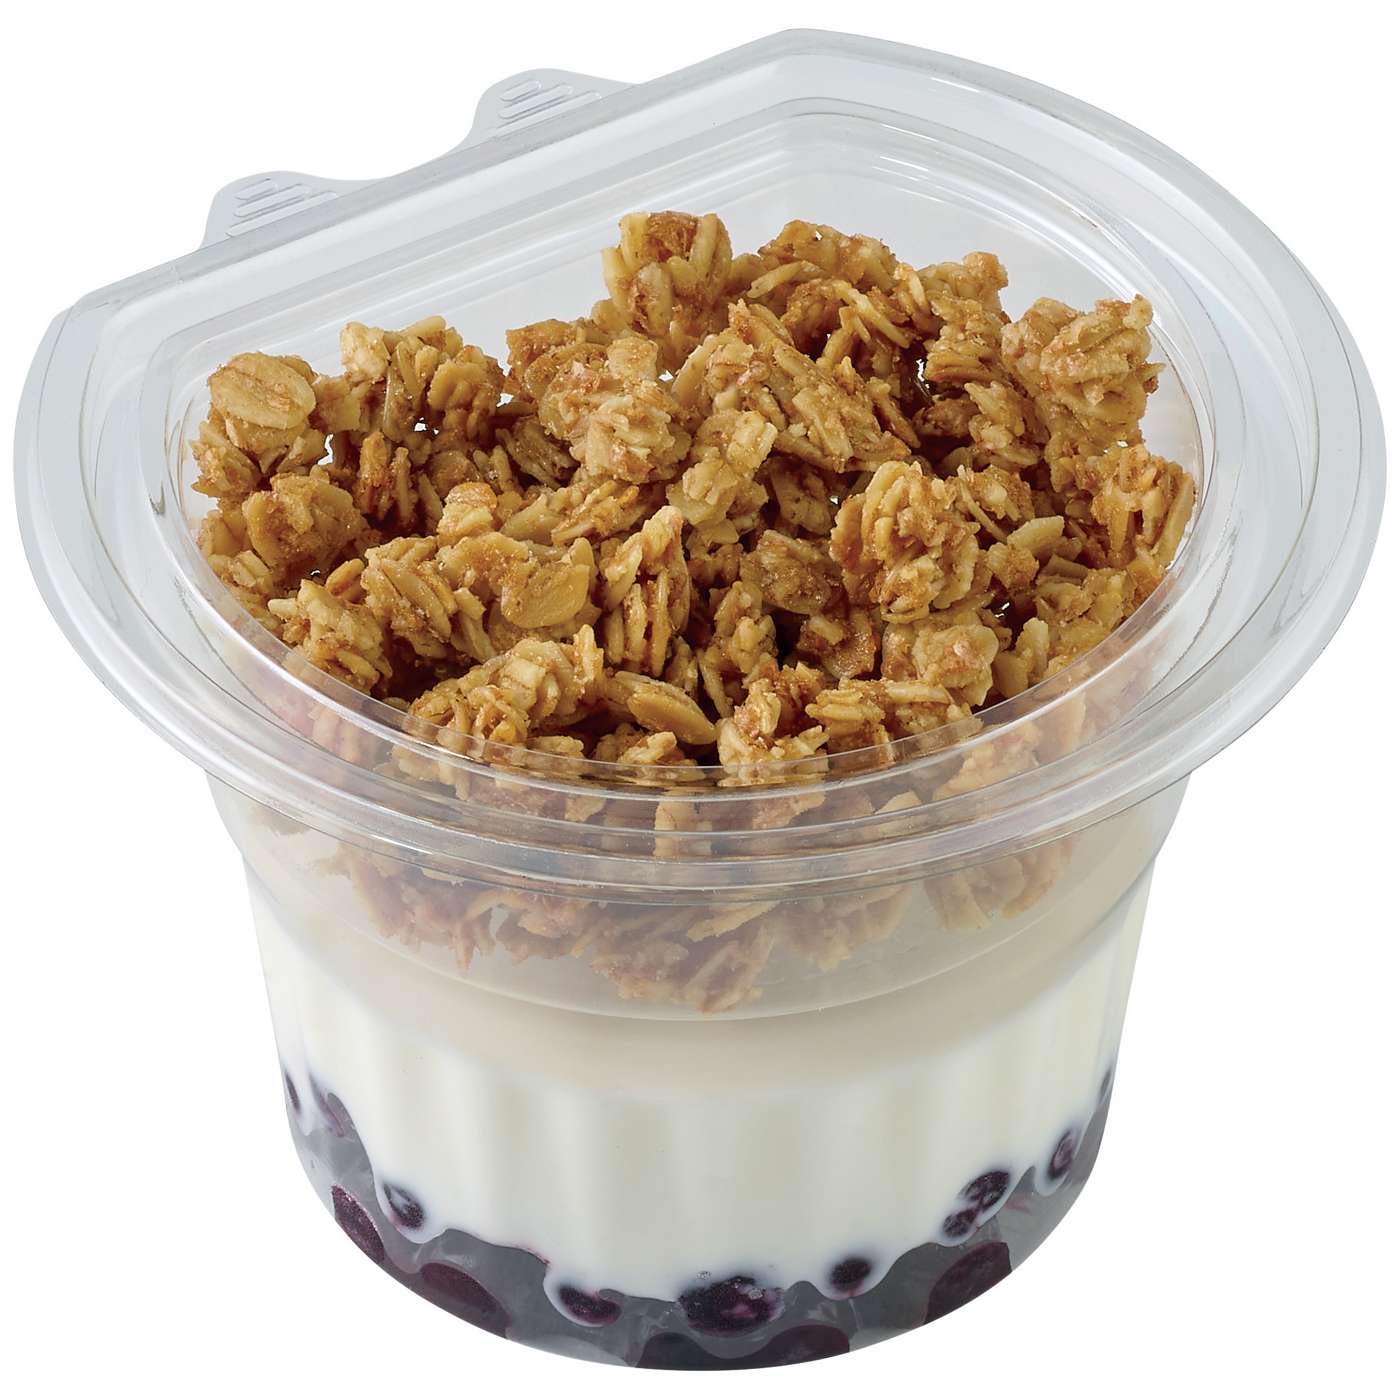 Meal Simple by H-E-B Vanilla Yogurt Parfait - Blueberries & Granola; image 1 of 3